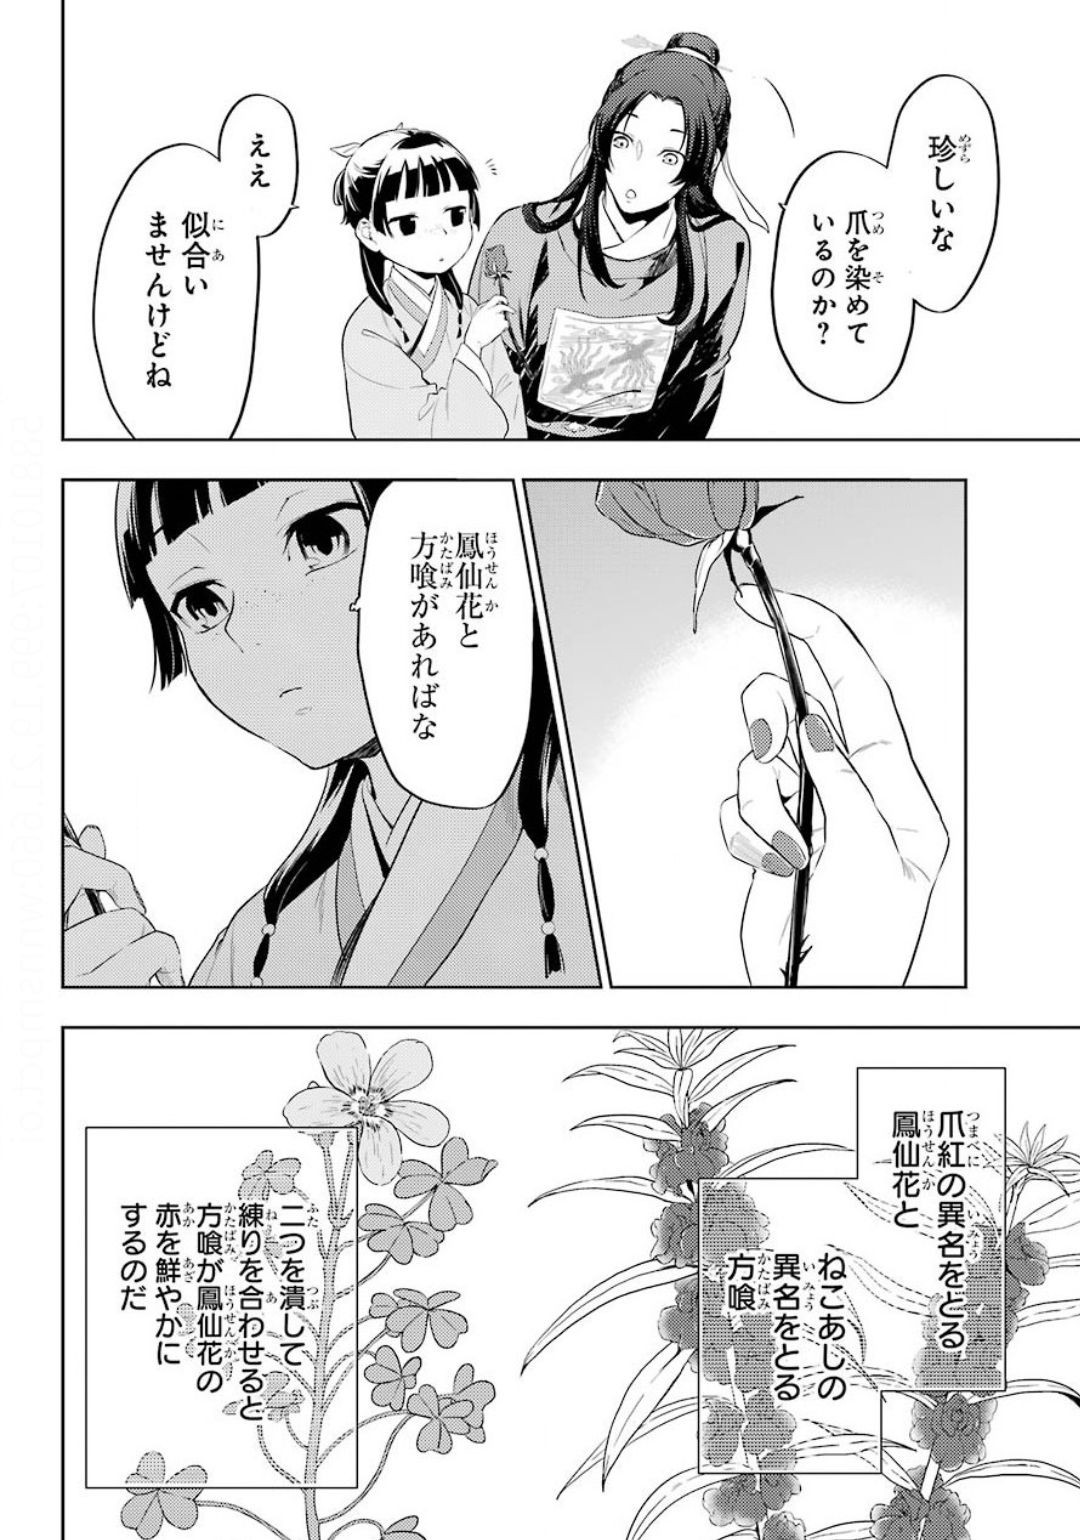 Kusuriya no Hitorigoto - Chapter 36-2 - Page 12